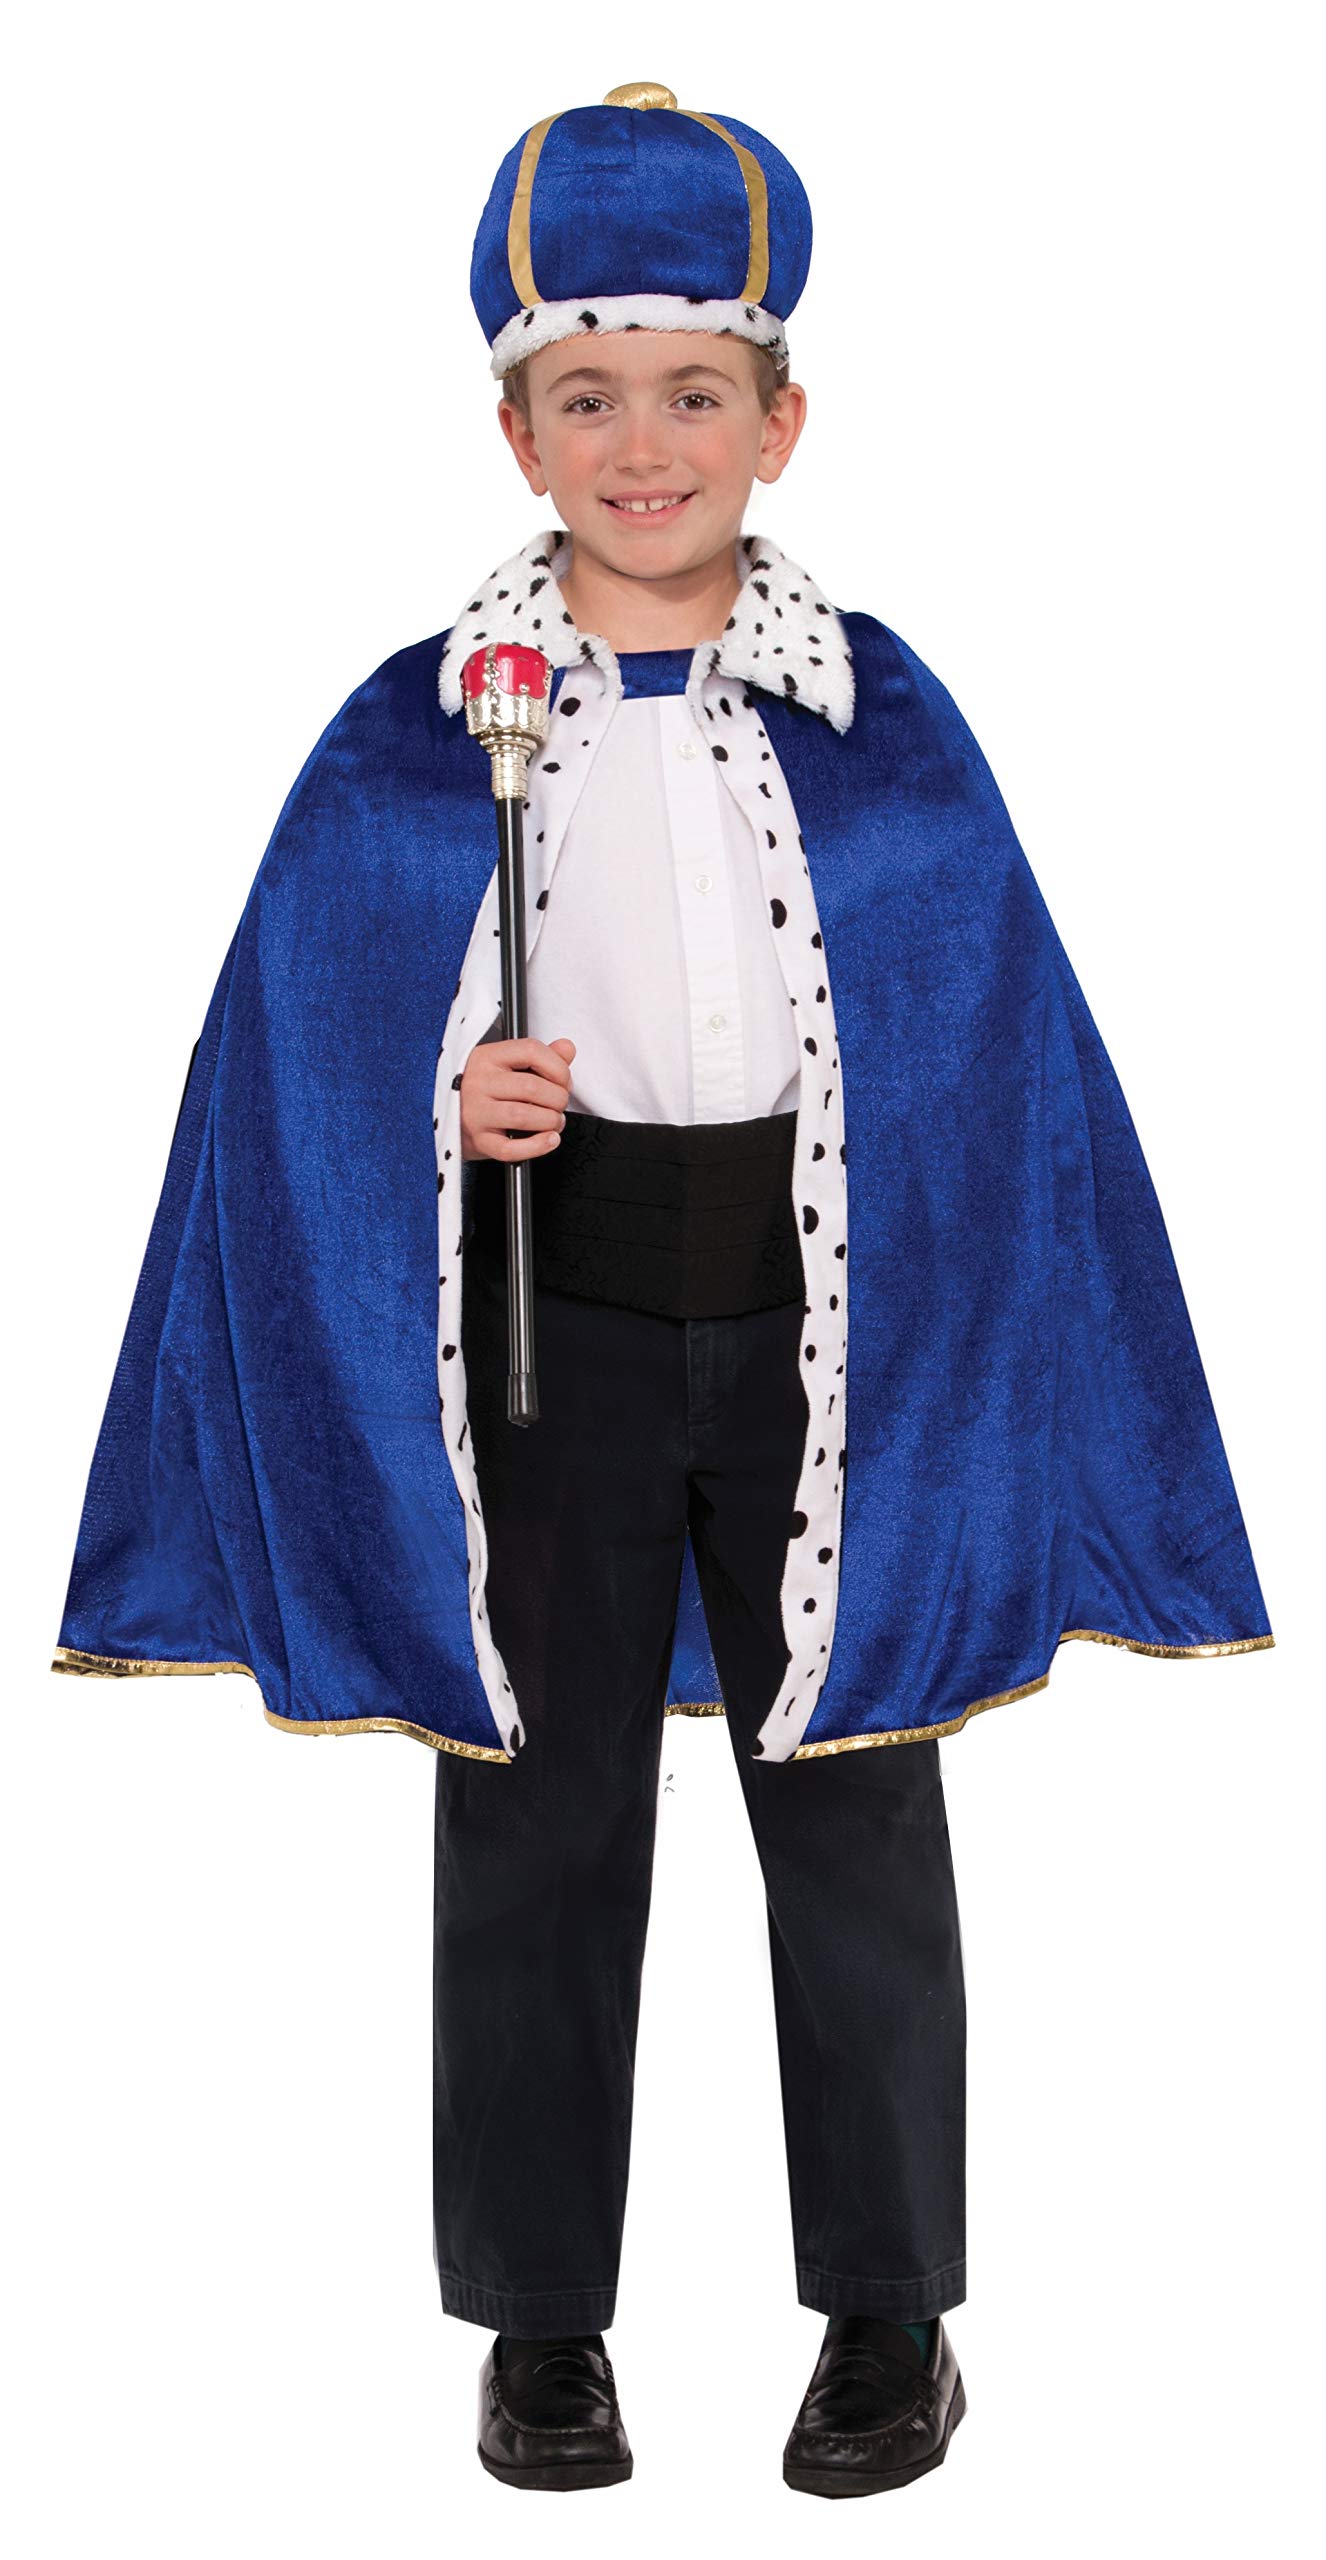 Forum Novelties Rubie's Child's Forum King Robe & Crown Set, Blue, One Size